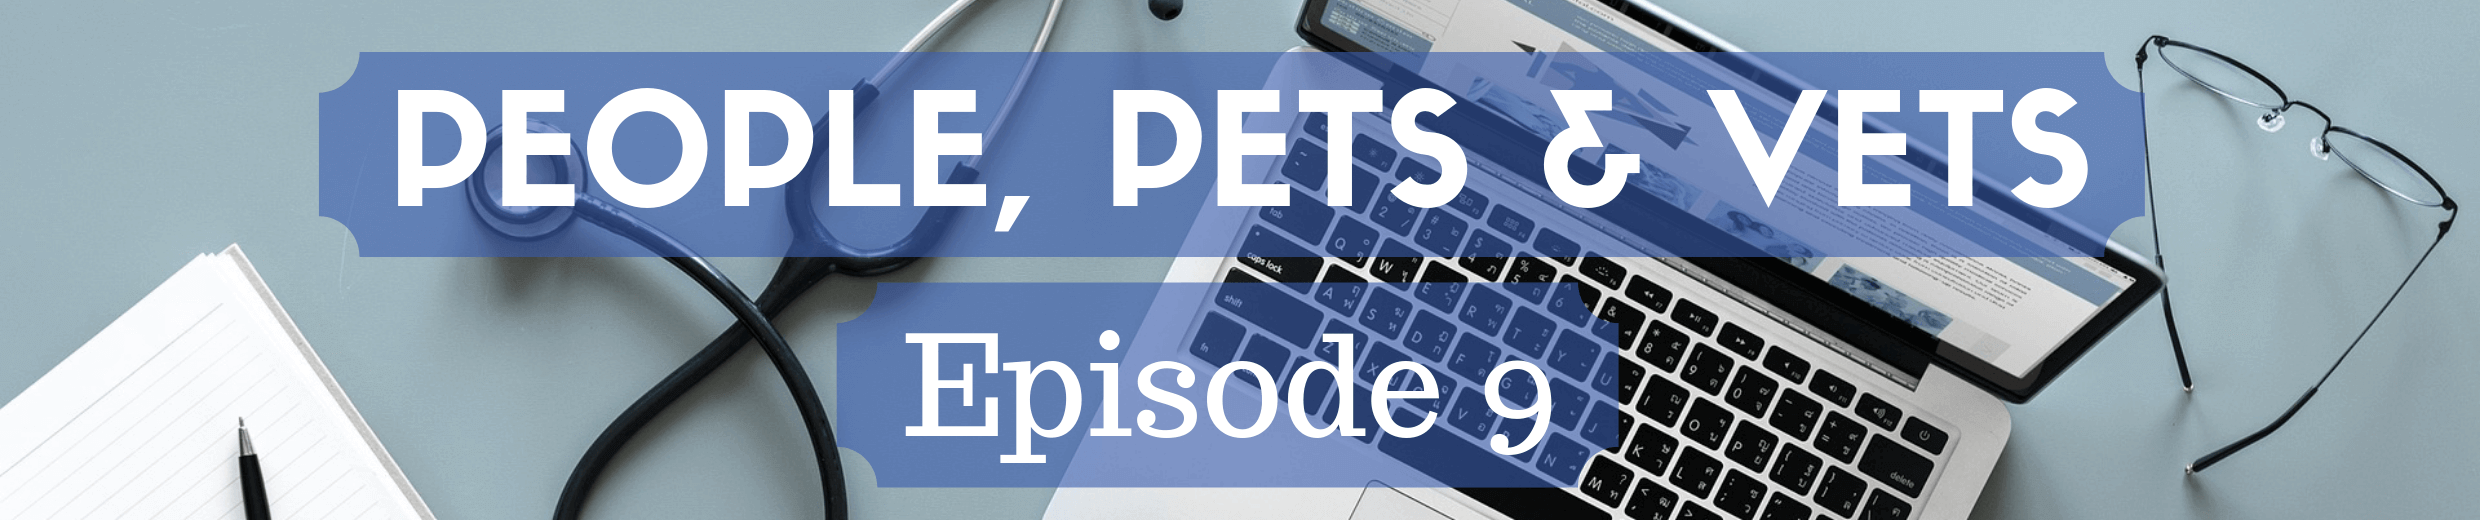 People, Pets & Vets: Episode 9